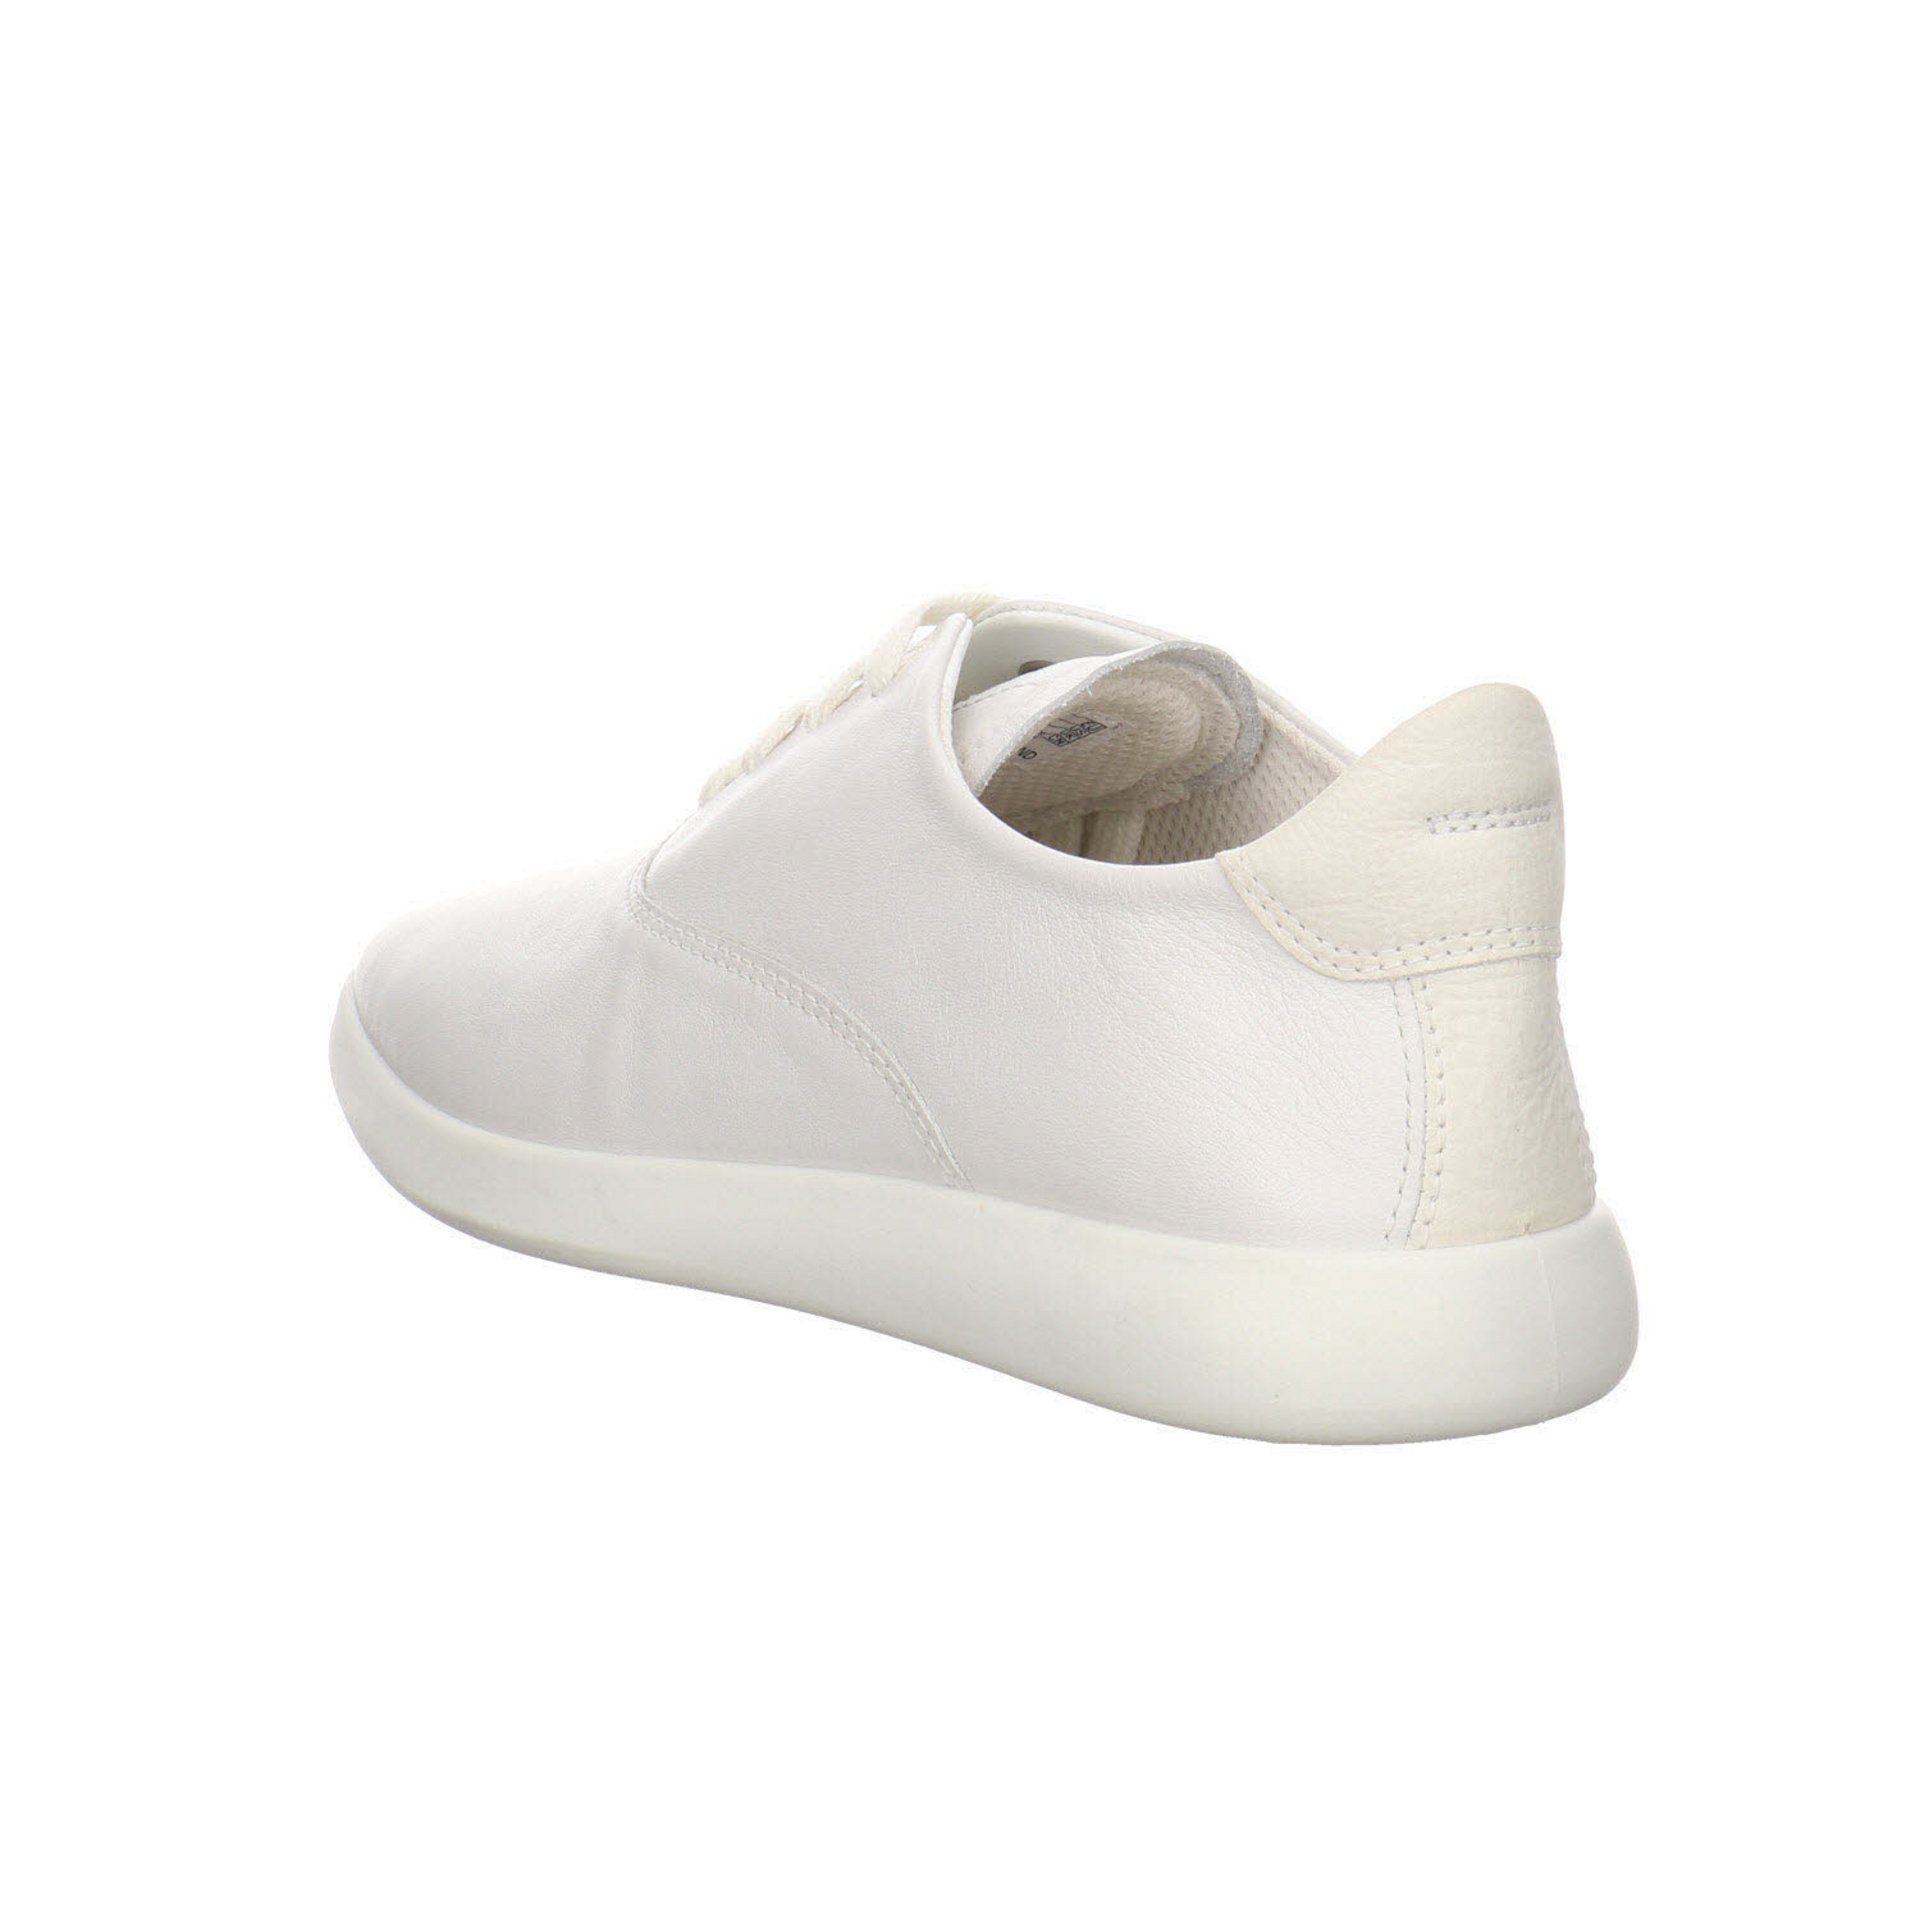 Sneaker WHITE/SHADOW Sneaker Ecco WHITE Glattleder Schnürschuh Damen Schuhe Minimalist